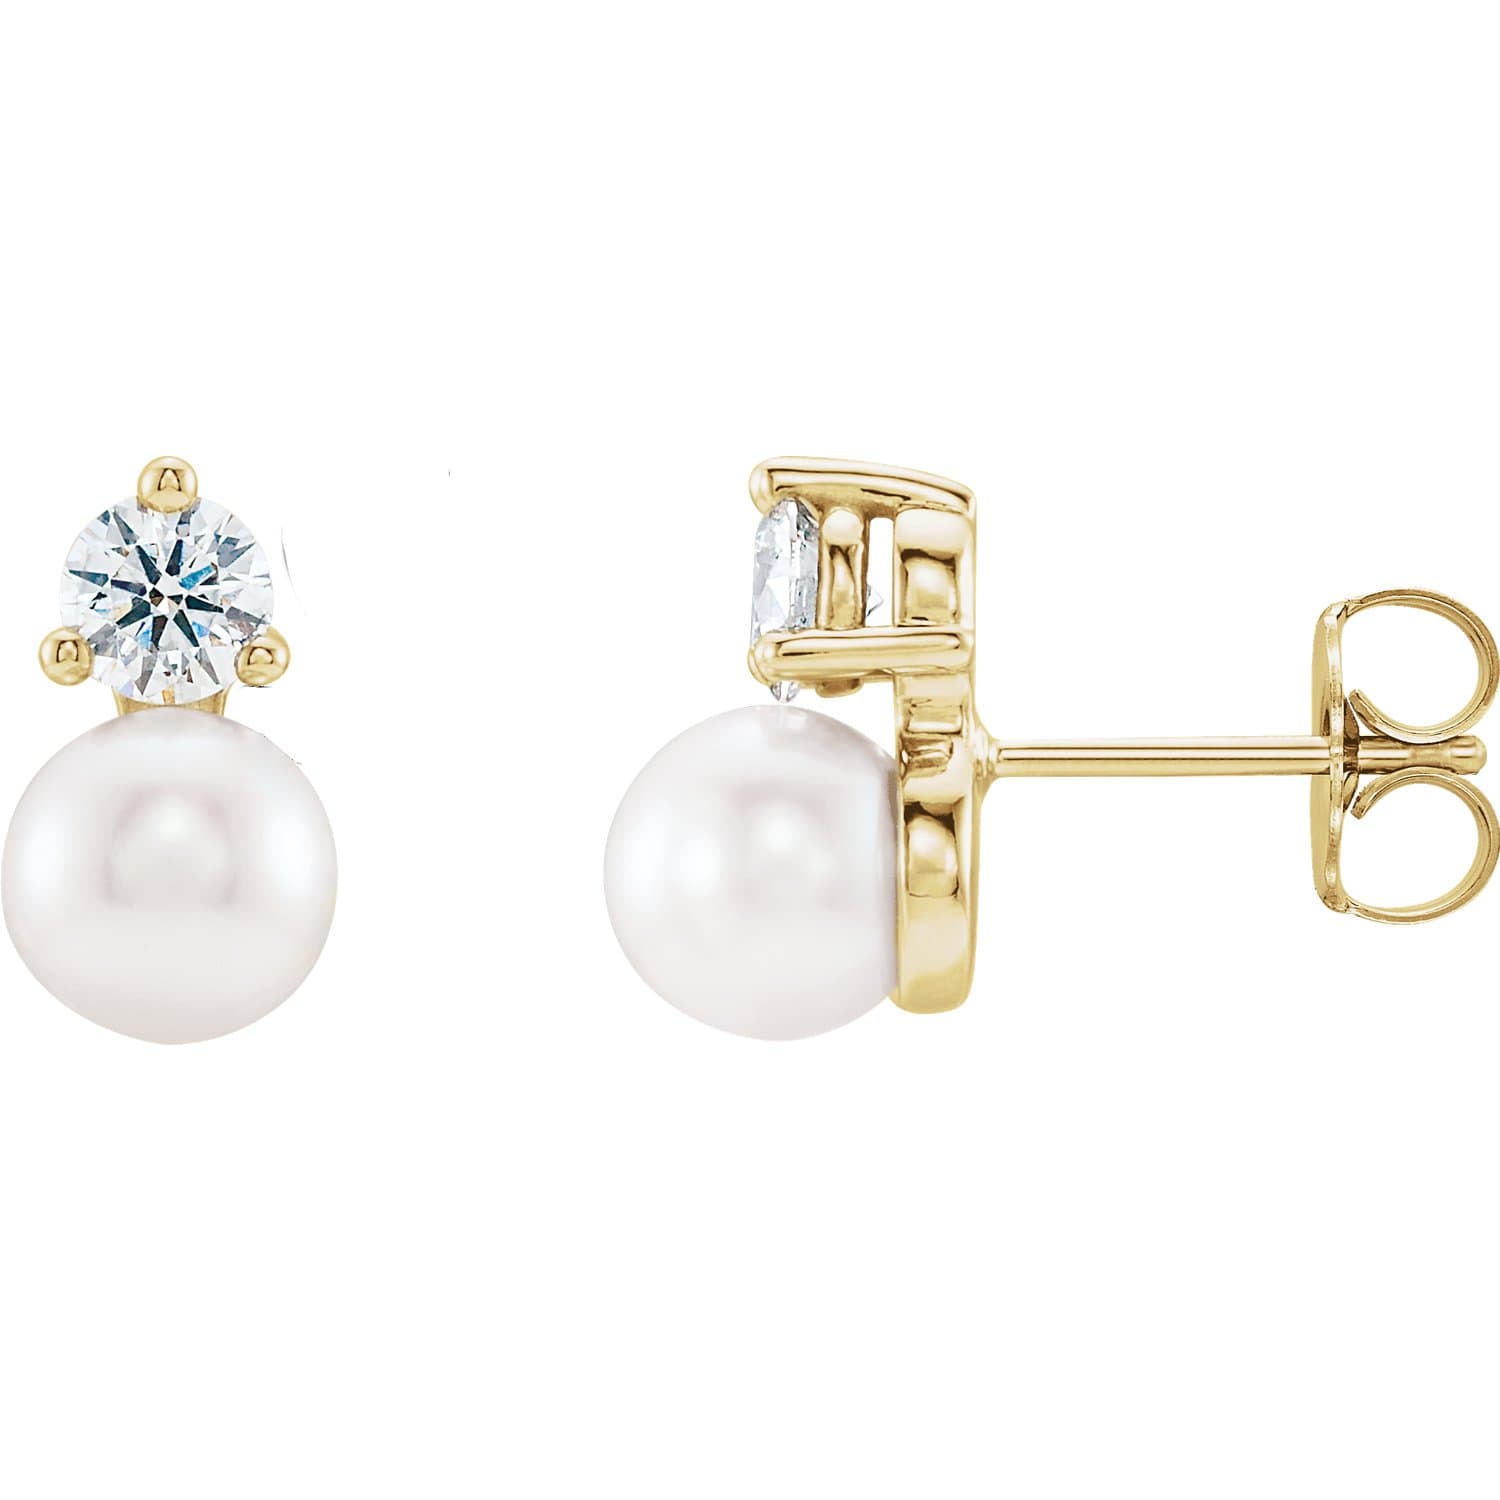 White Freshwater Cultured Pearl & Diamond Cluster Stud Earrings 14k Yellow Gold / Medium Size: 5mm Pearl & 3mm diamond Earrings by Nodeform